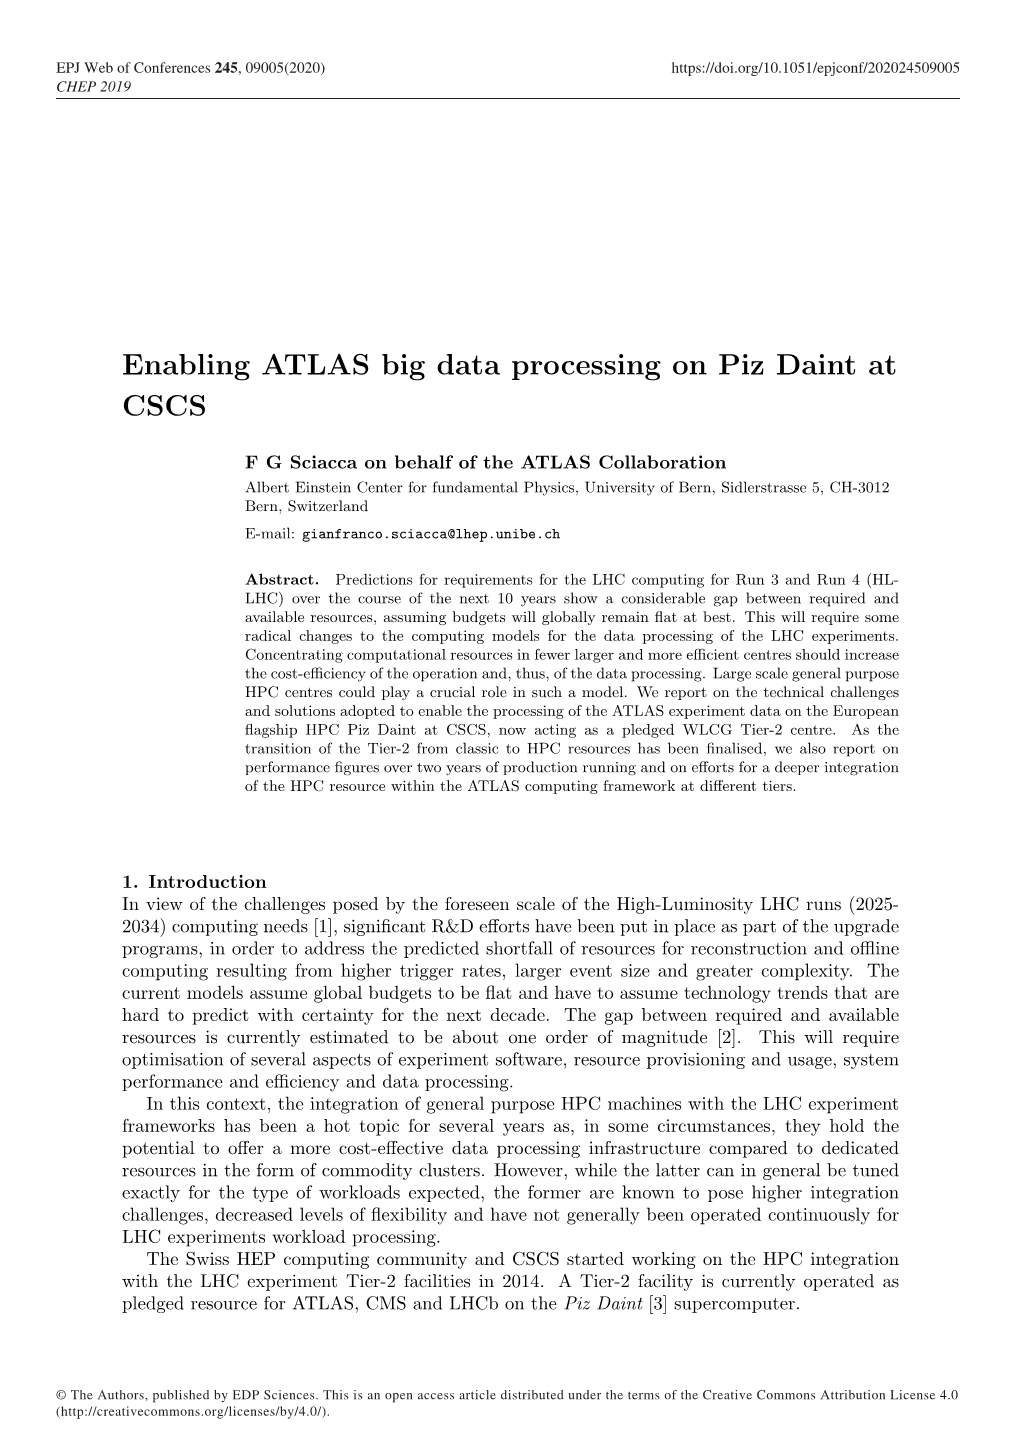 Enabling ATLAS Big Data Processing on Piz Daint at CSCS